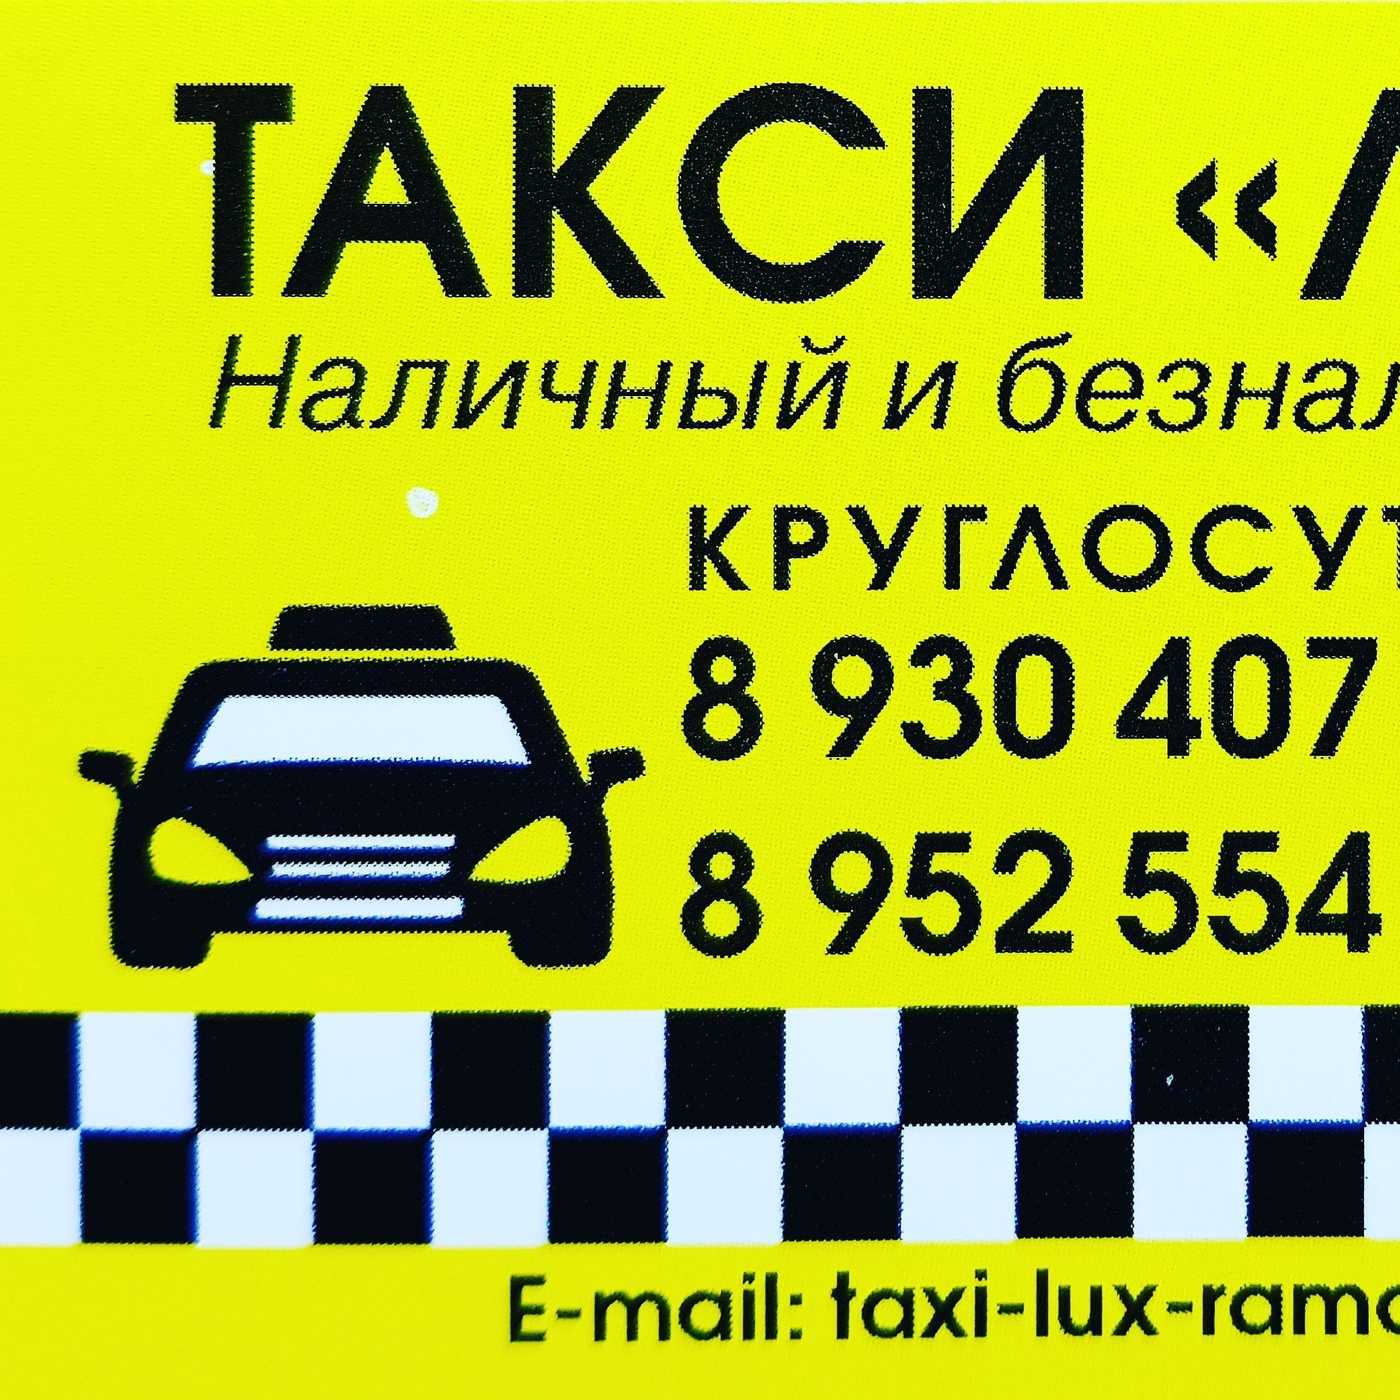 Такси балабаново телефон. Такси Люкс. Номер такси. Номера таксистов. Такси Люкс номер телефона.